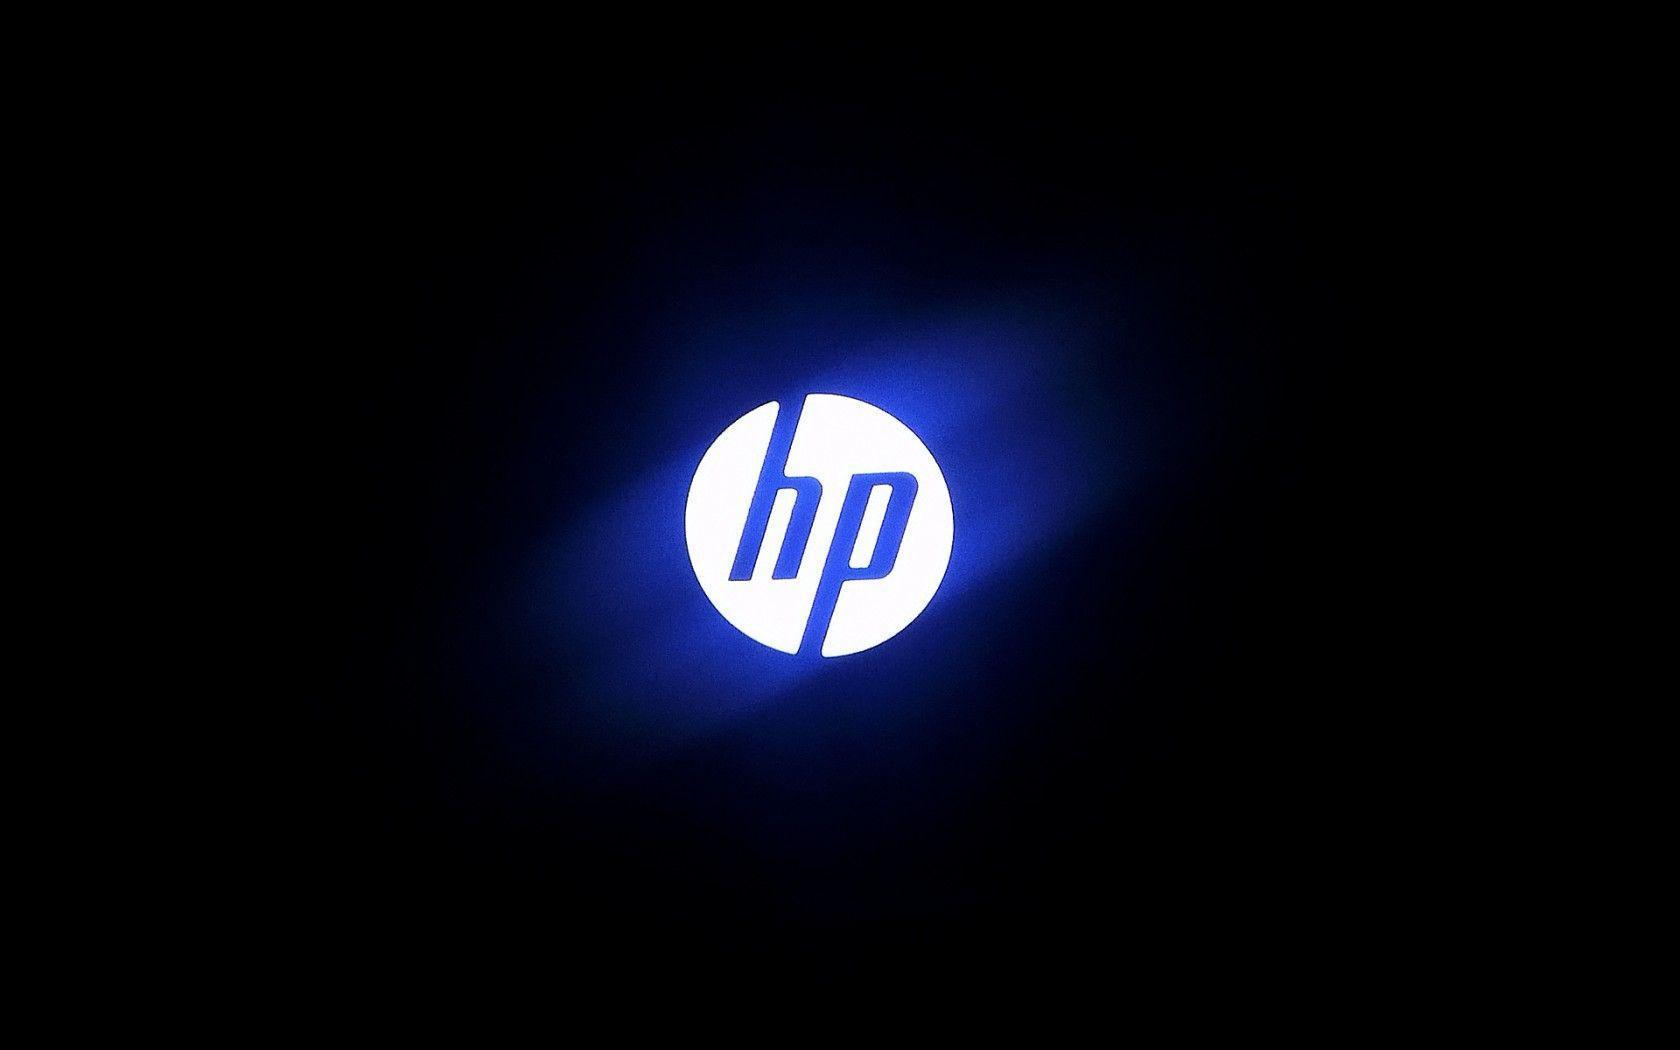 HP Glowing logo wallpaper HD